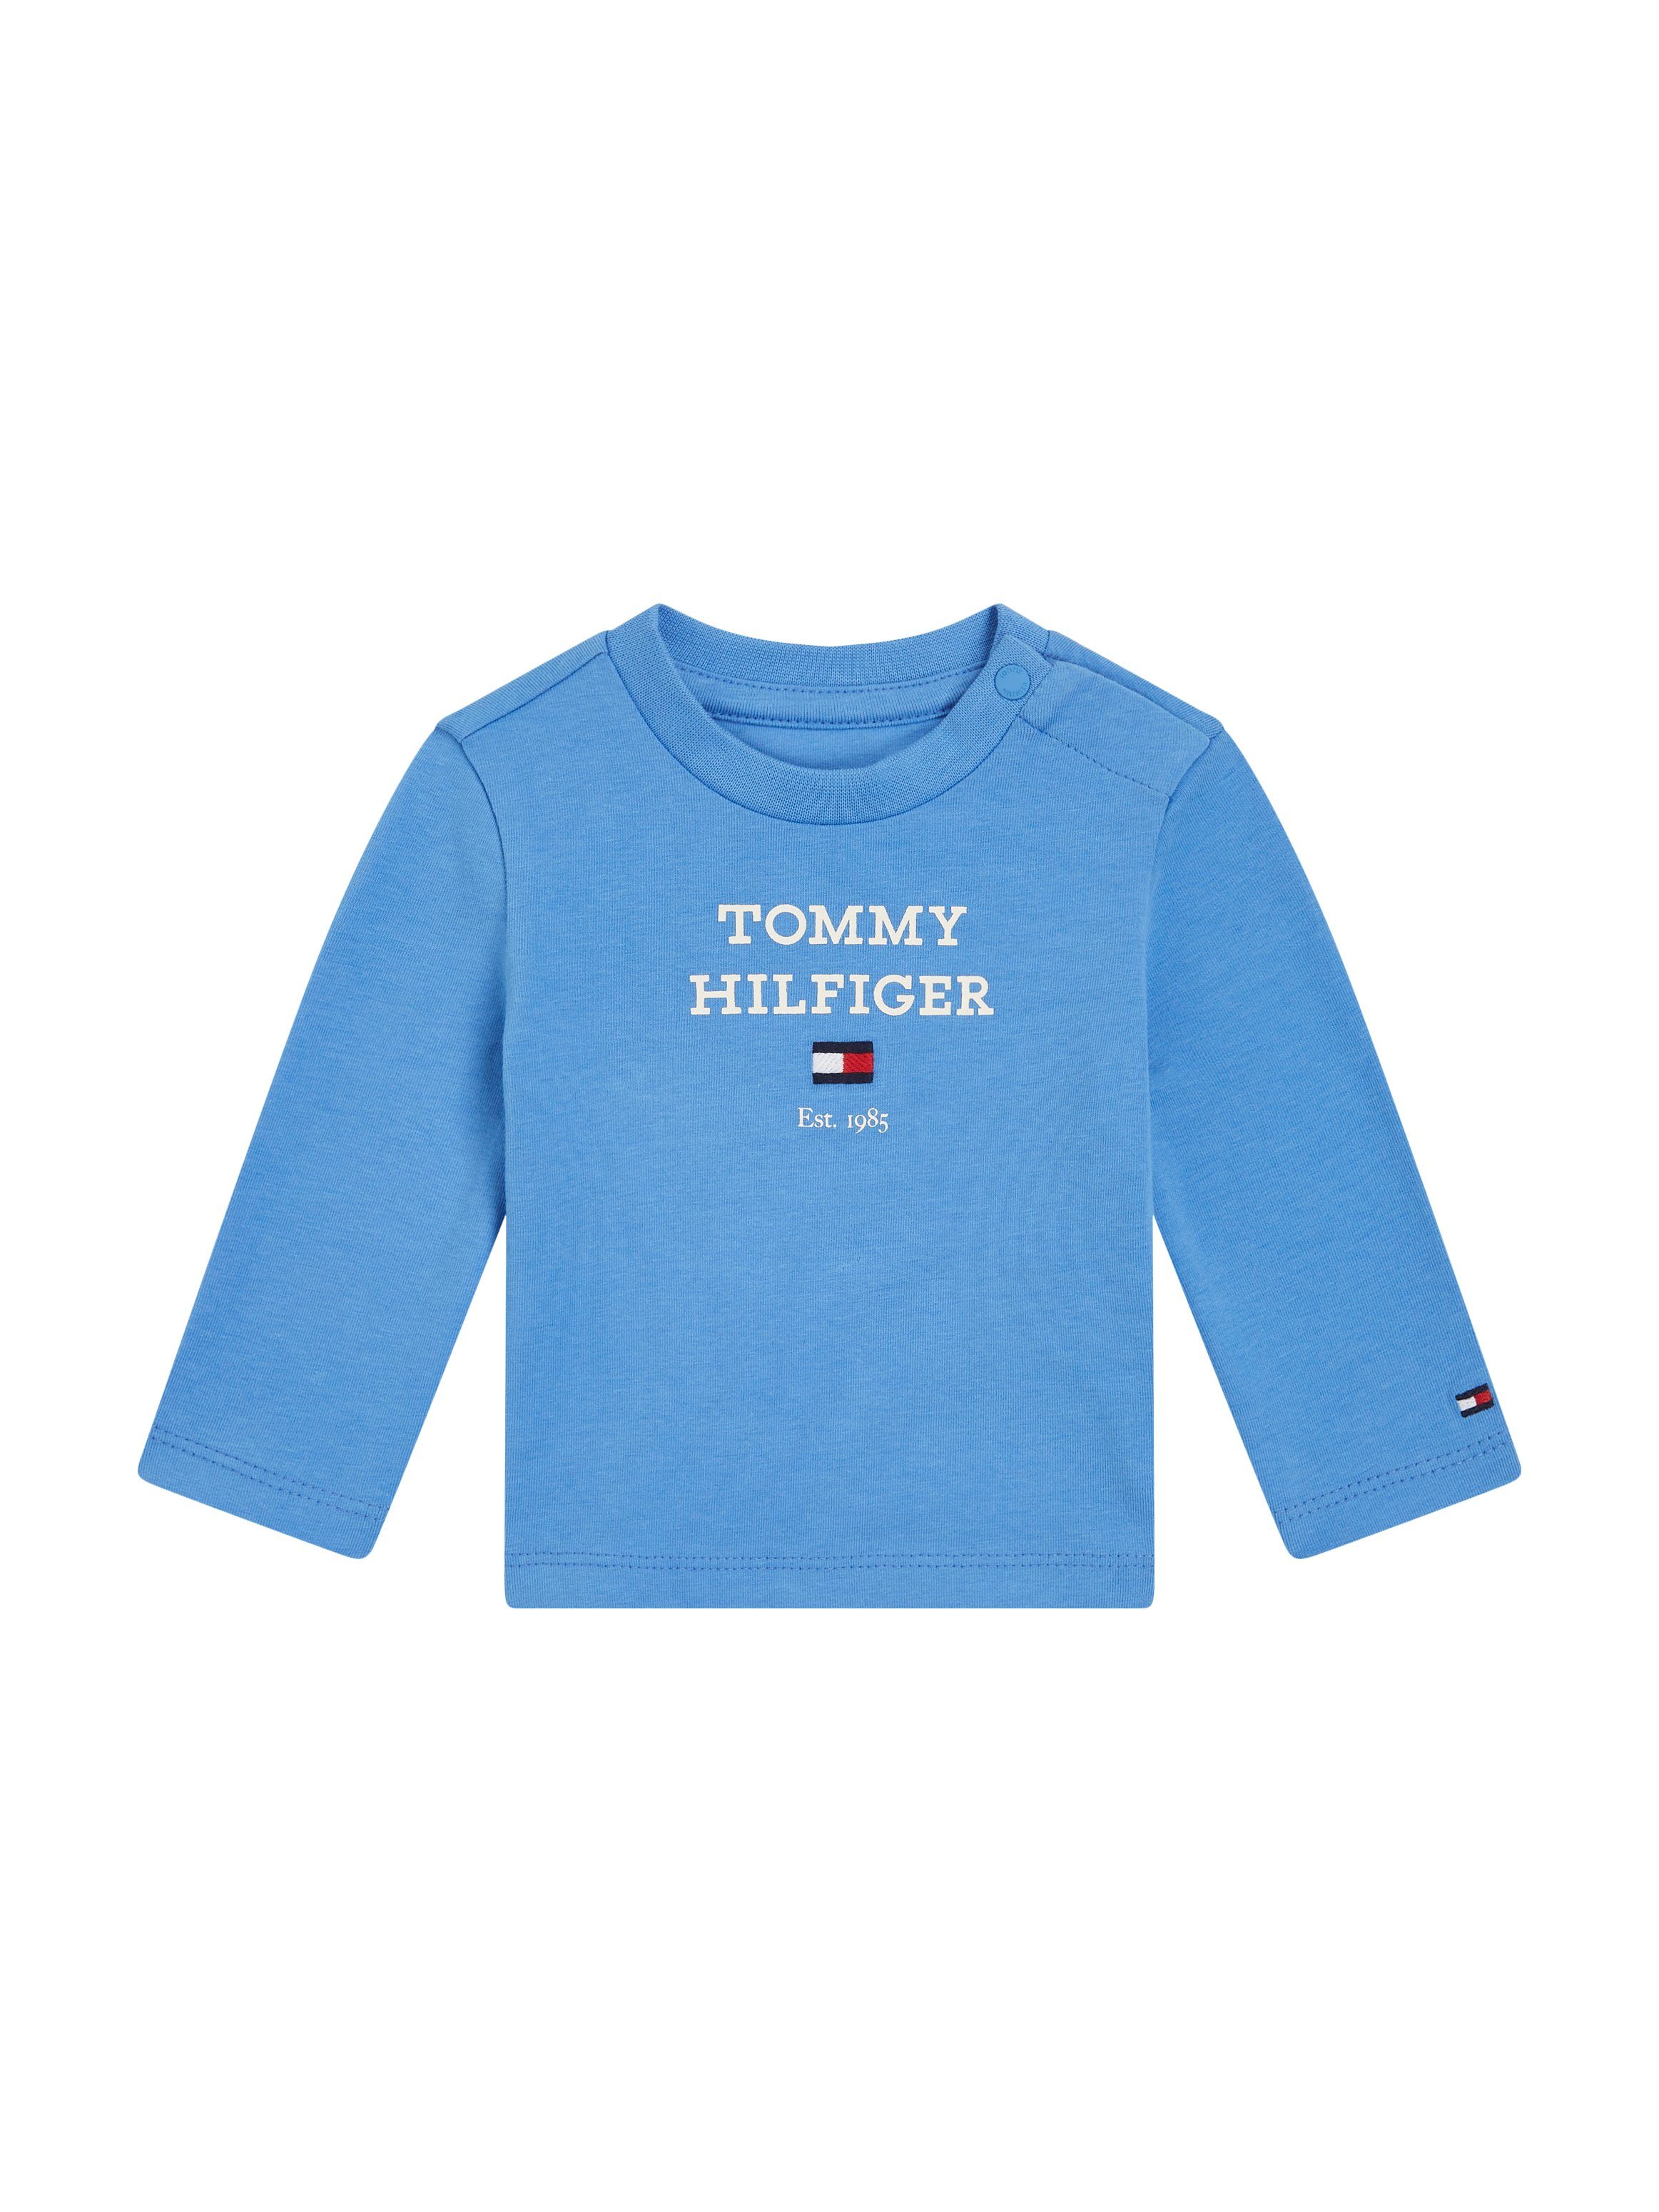 Tommy Hilfiger baby longsleeve met tekst lichtblauw Meisjes Stretchkatoen Ronde hals 86